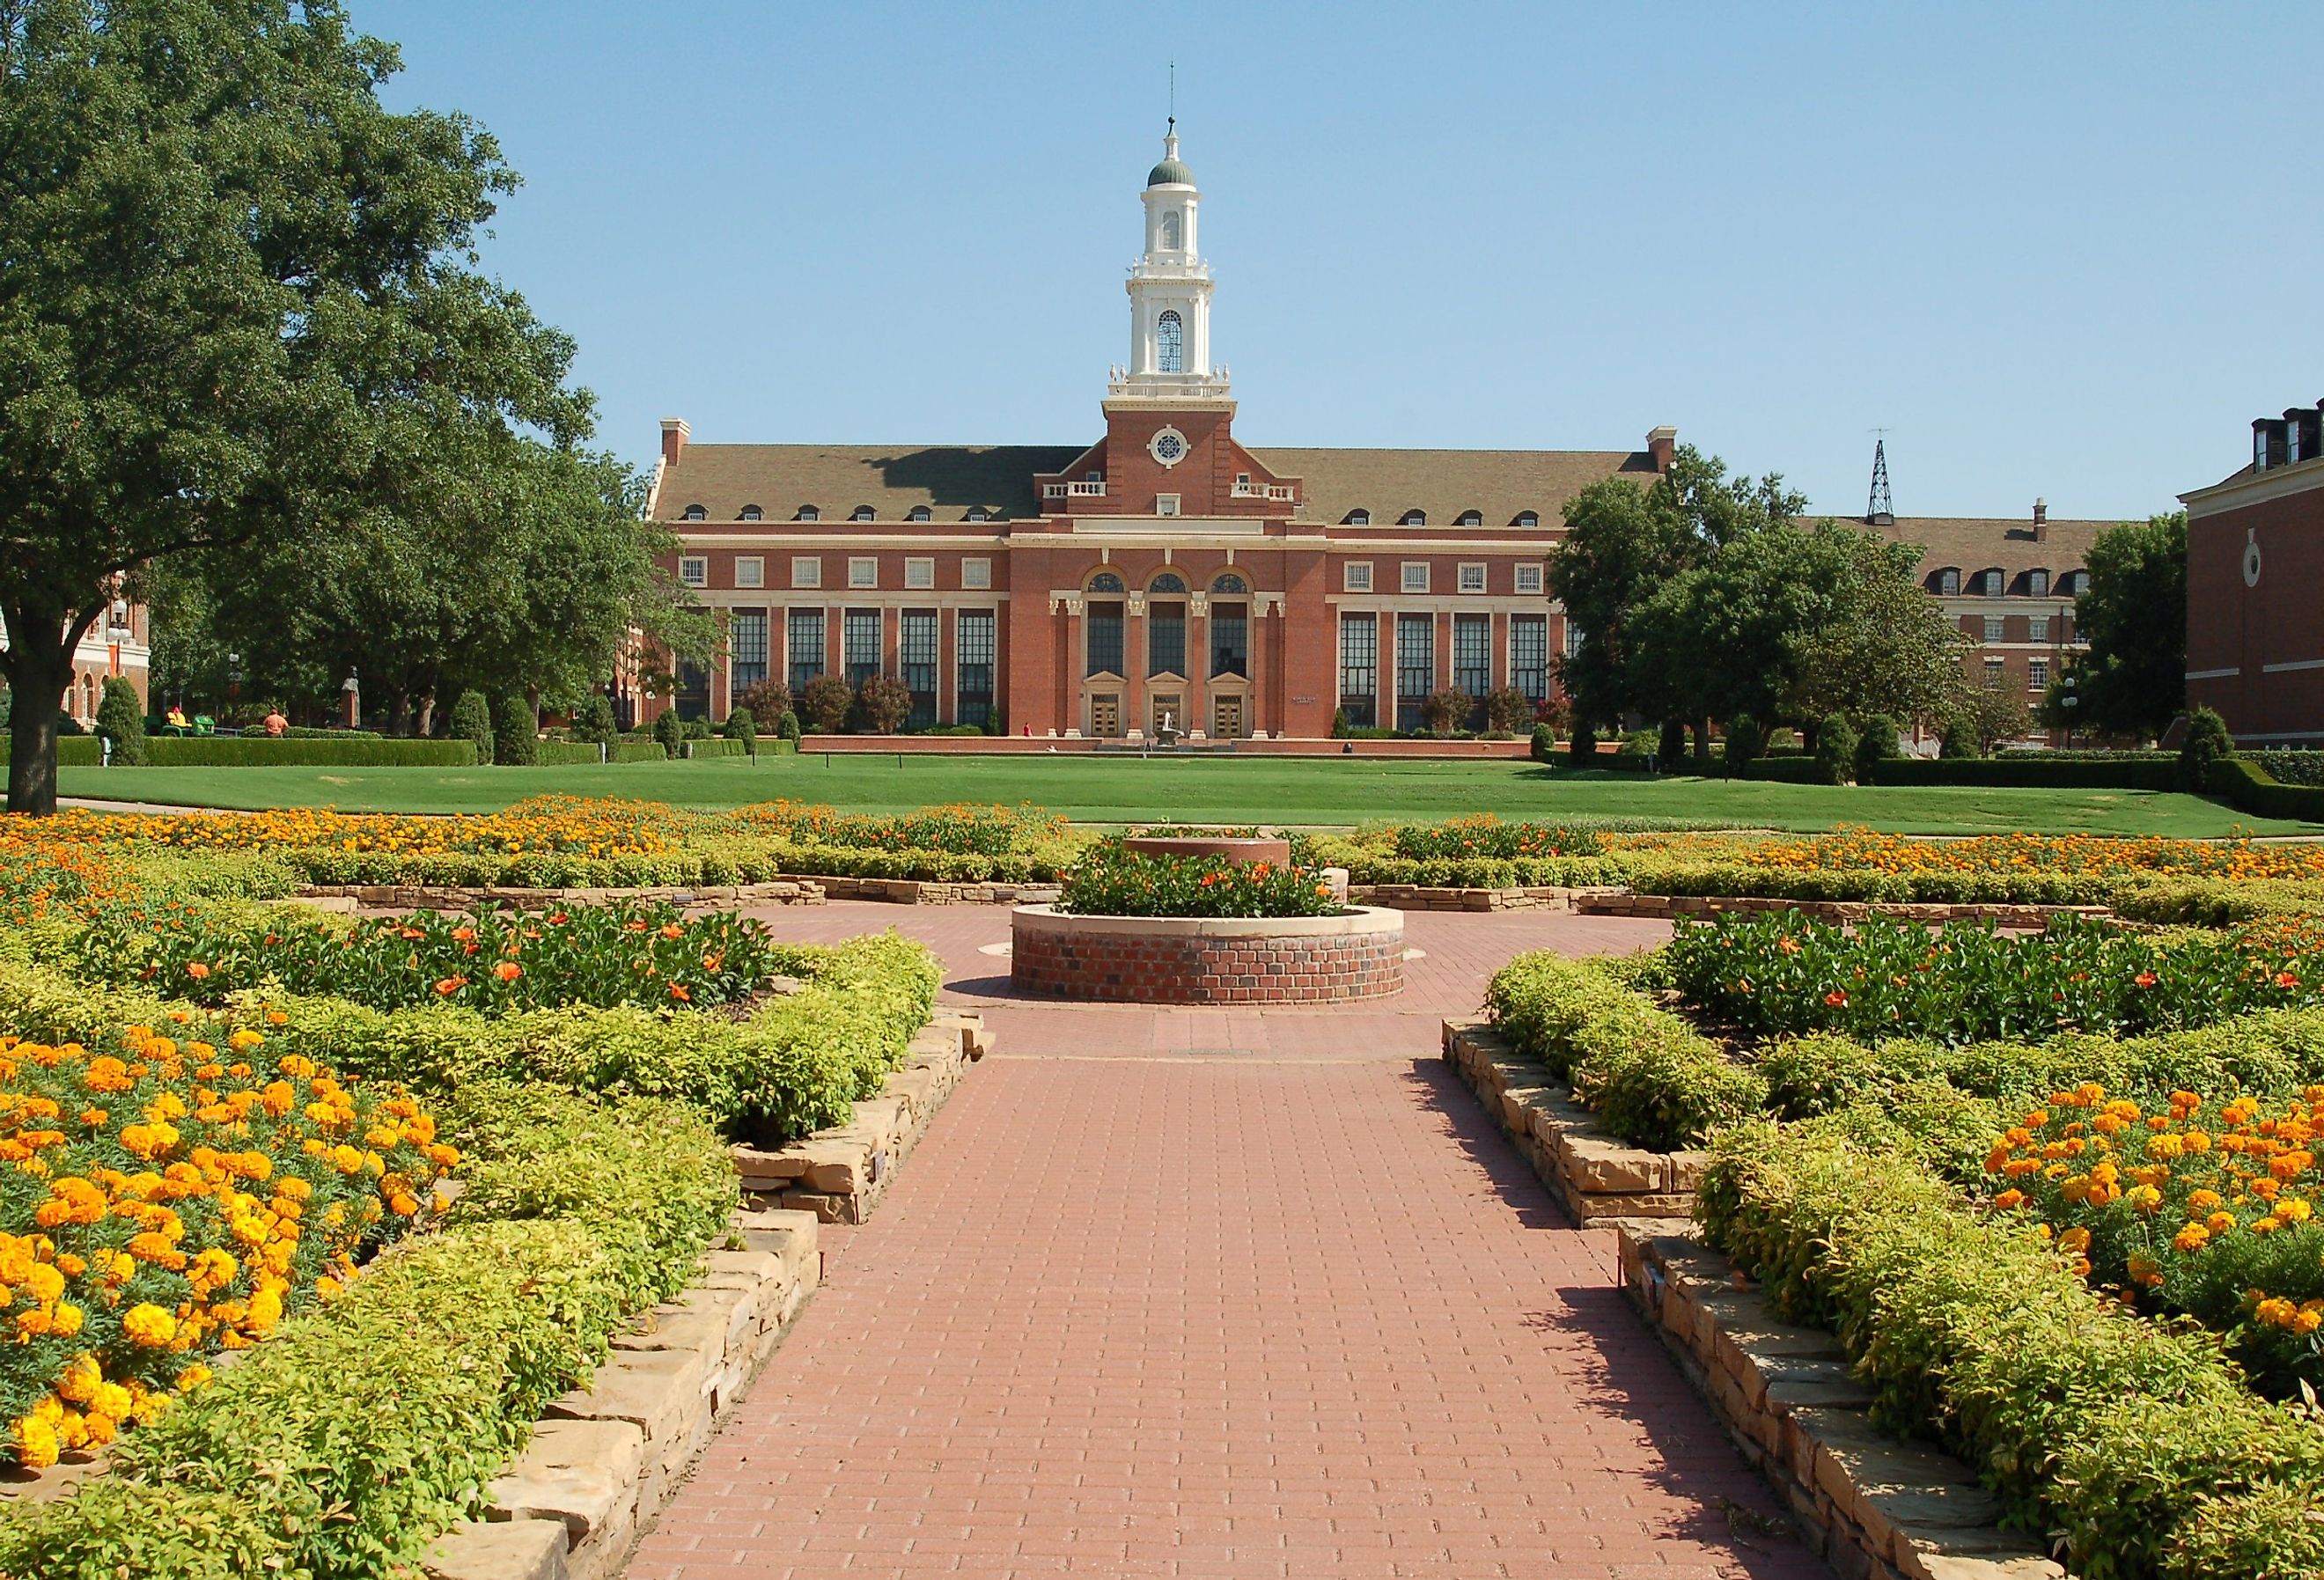 Oklahoma State University's Edmon Low Library in Stillwater, Oklahoma. Image credit MWaits via Shutterstock.